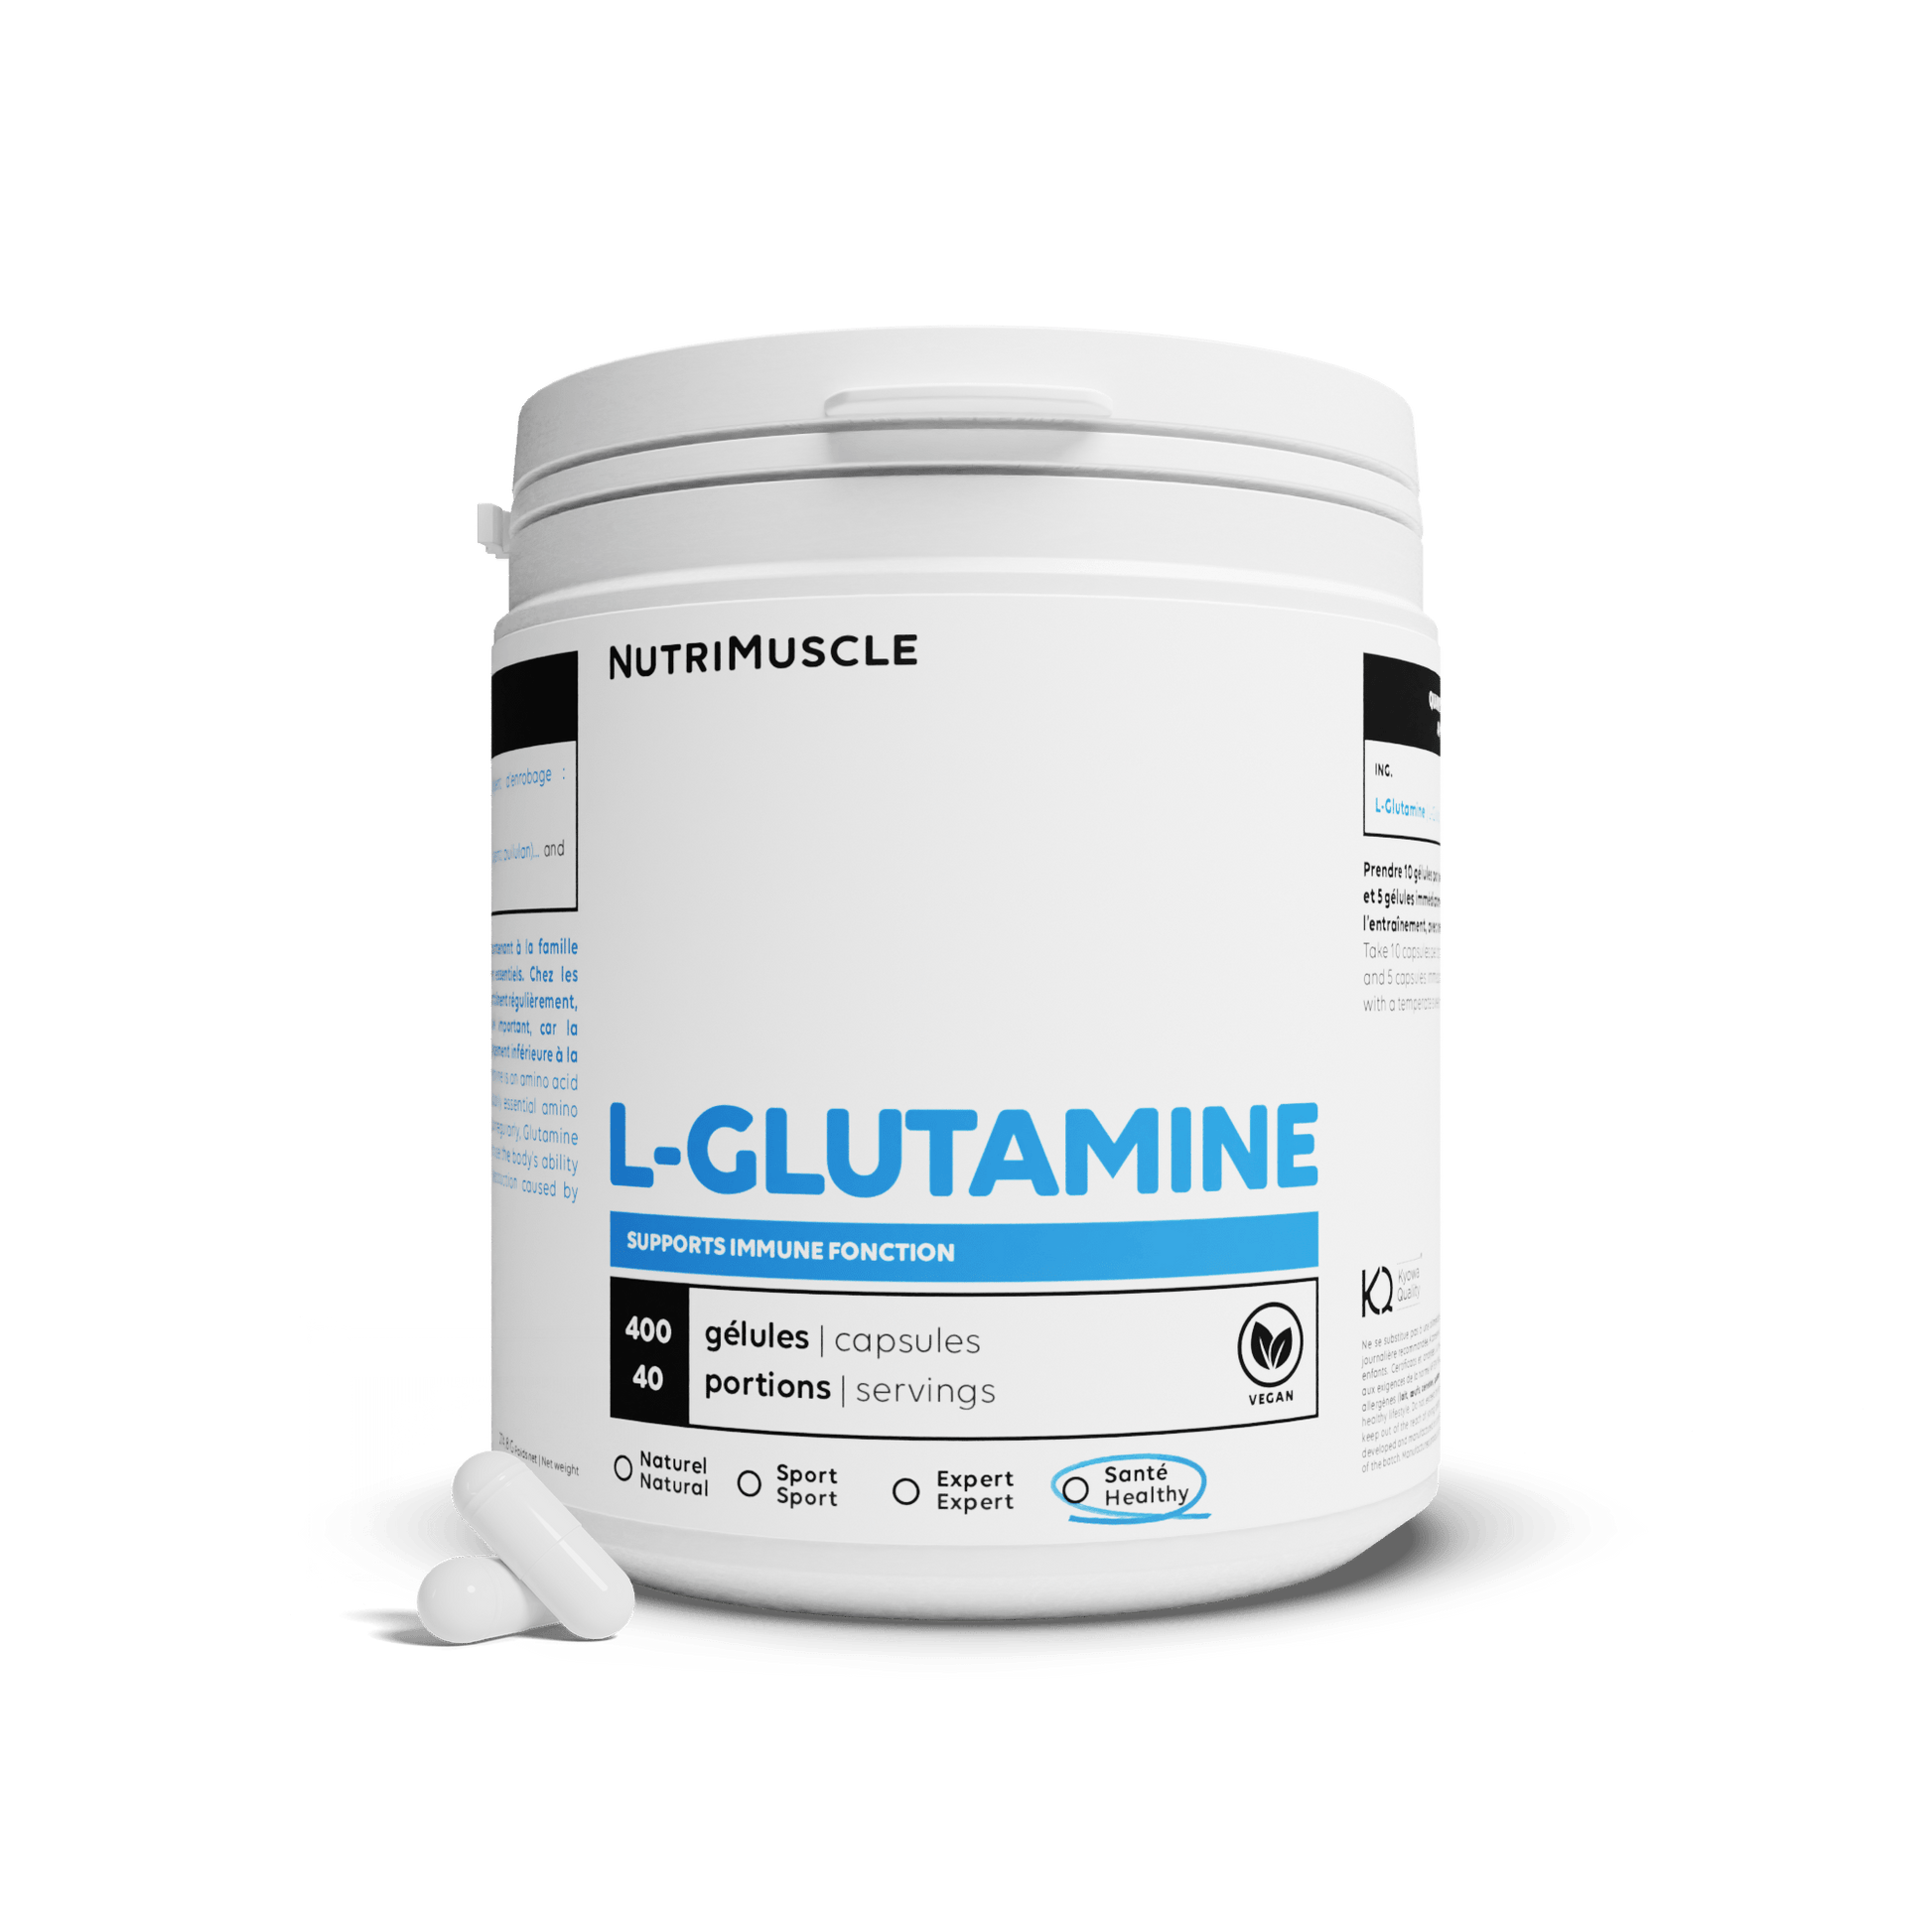 Nutrimuscle Acides aminés 400 gélules Glutamine (L-Glutamine) en gélules